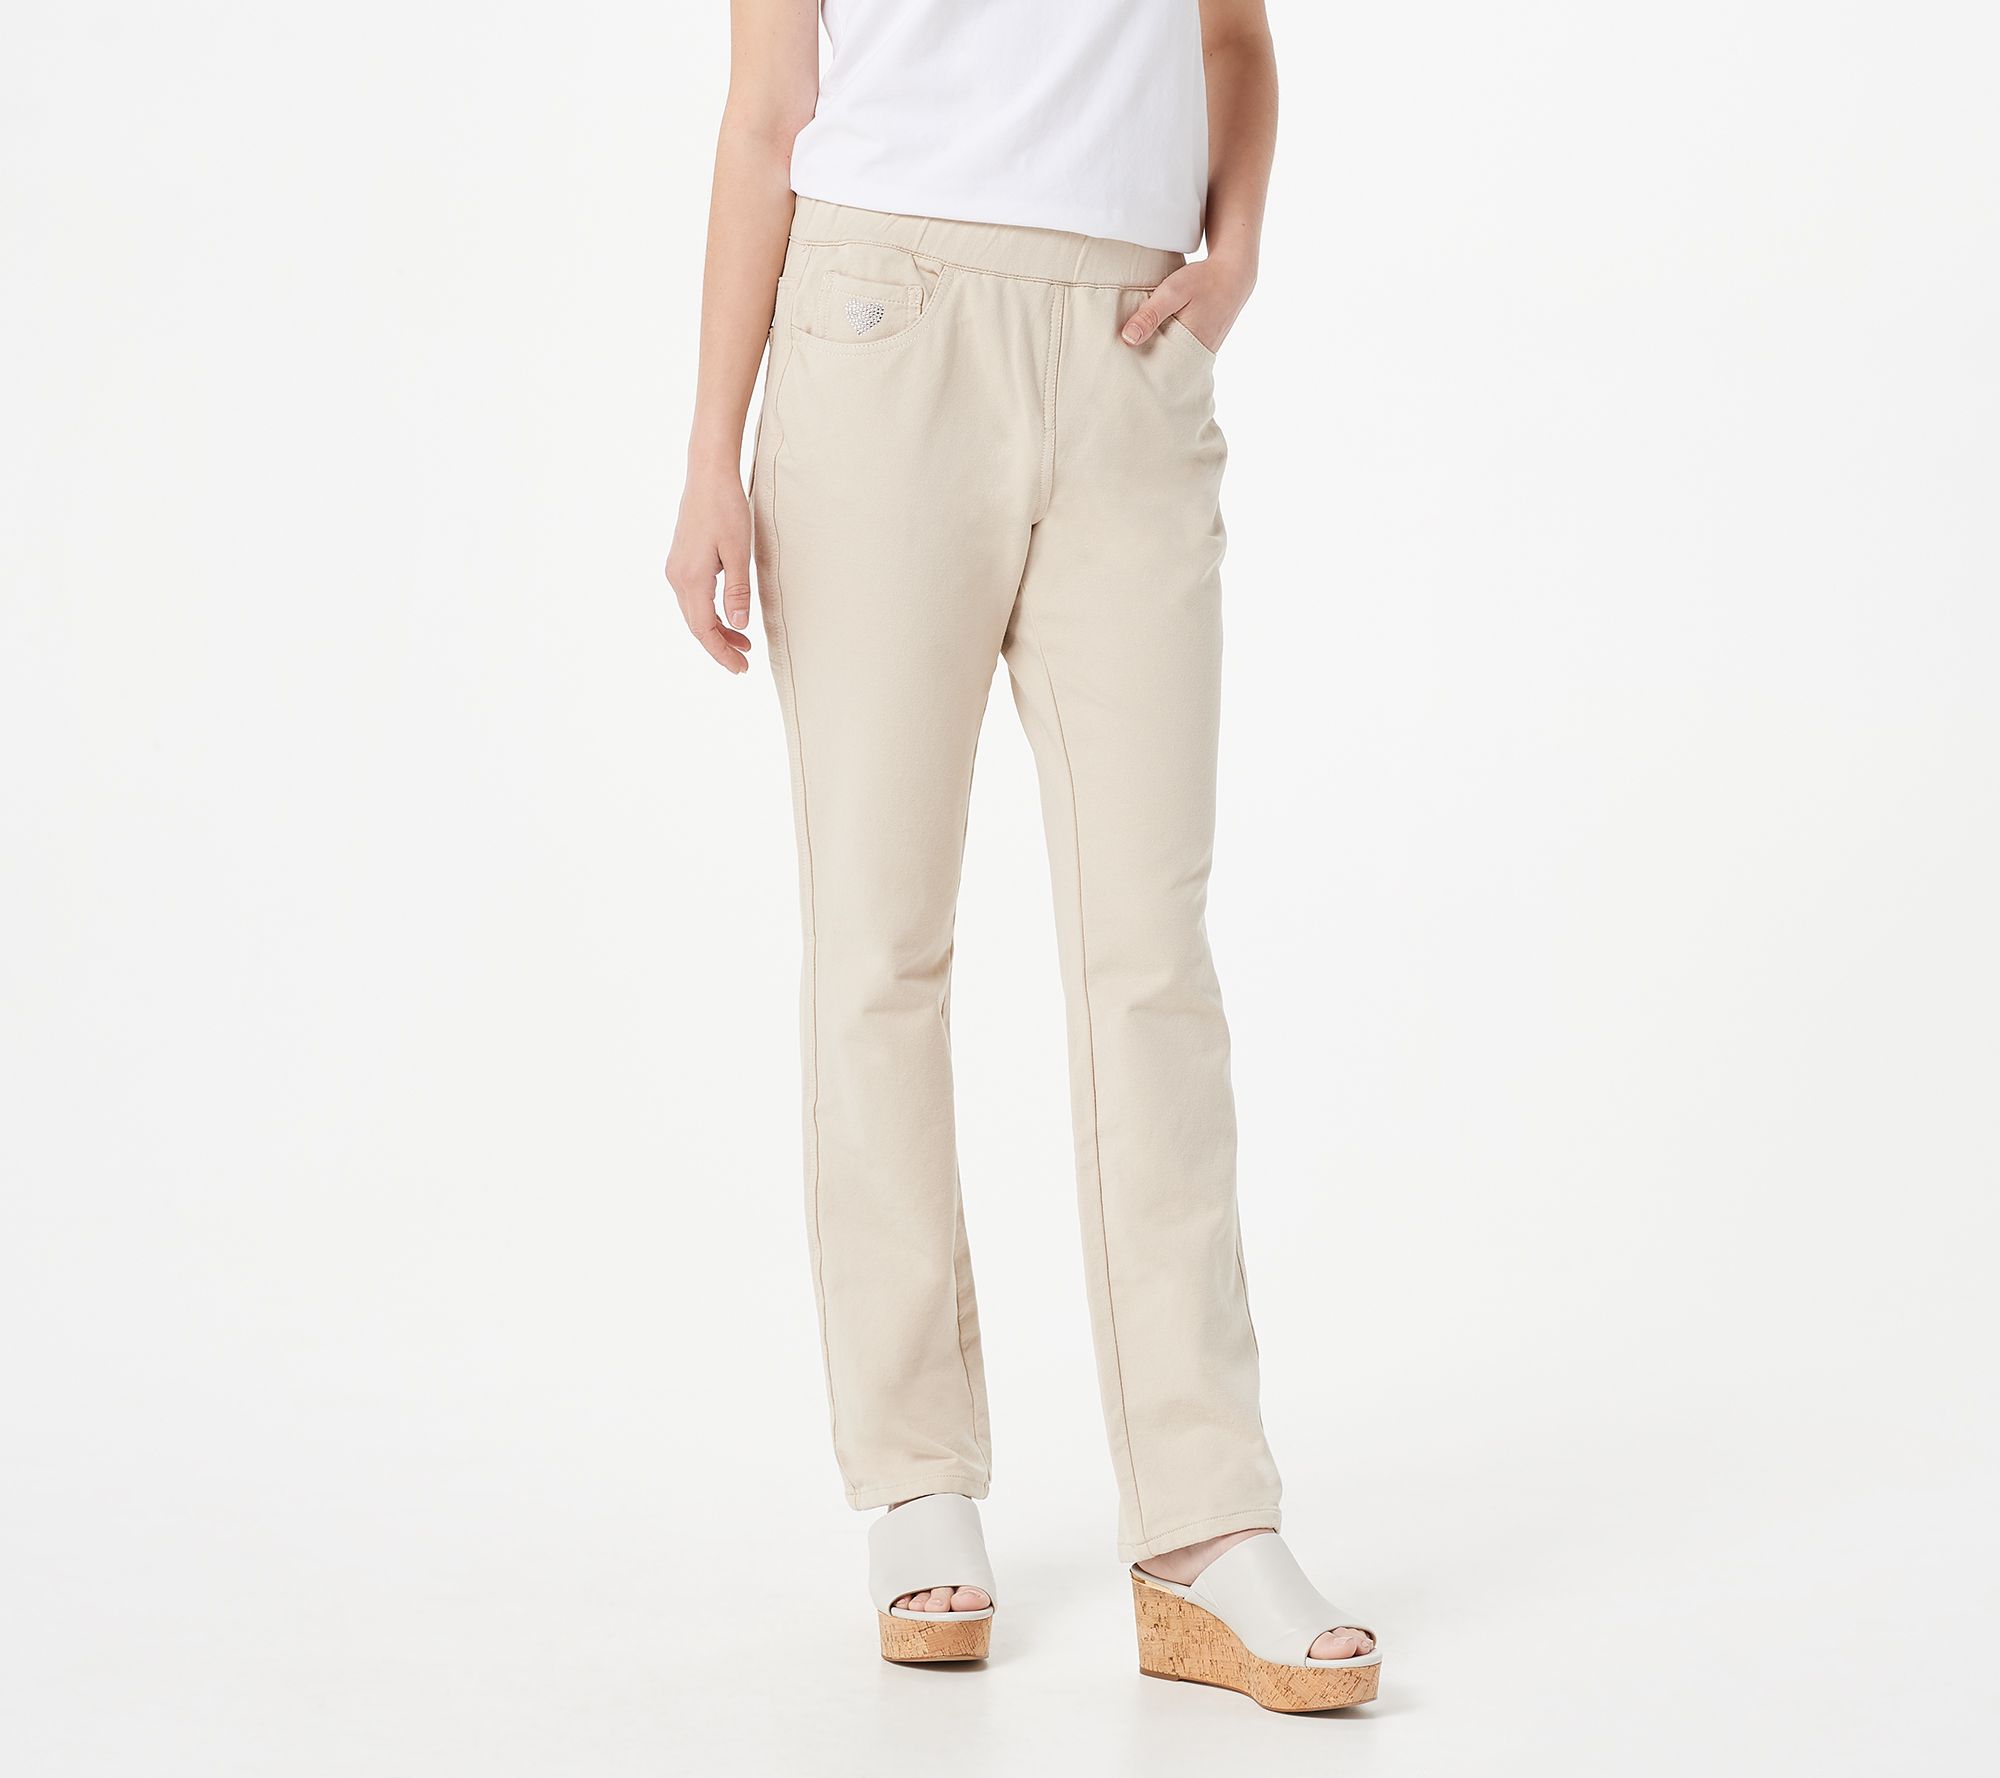 Quacker Factory — Women's Tunics, Pants & Blouses — QVC.com